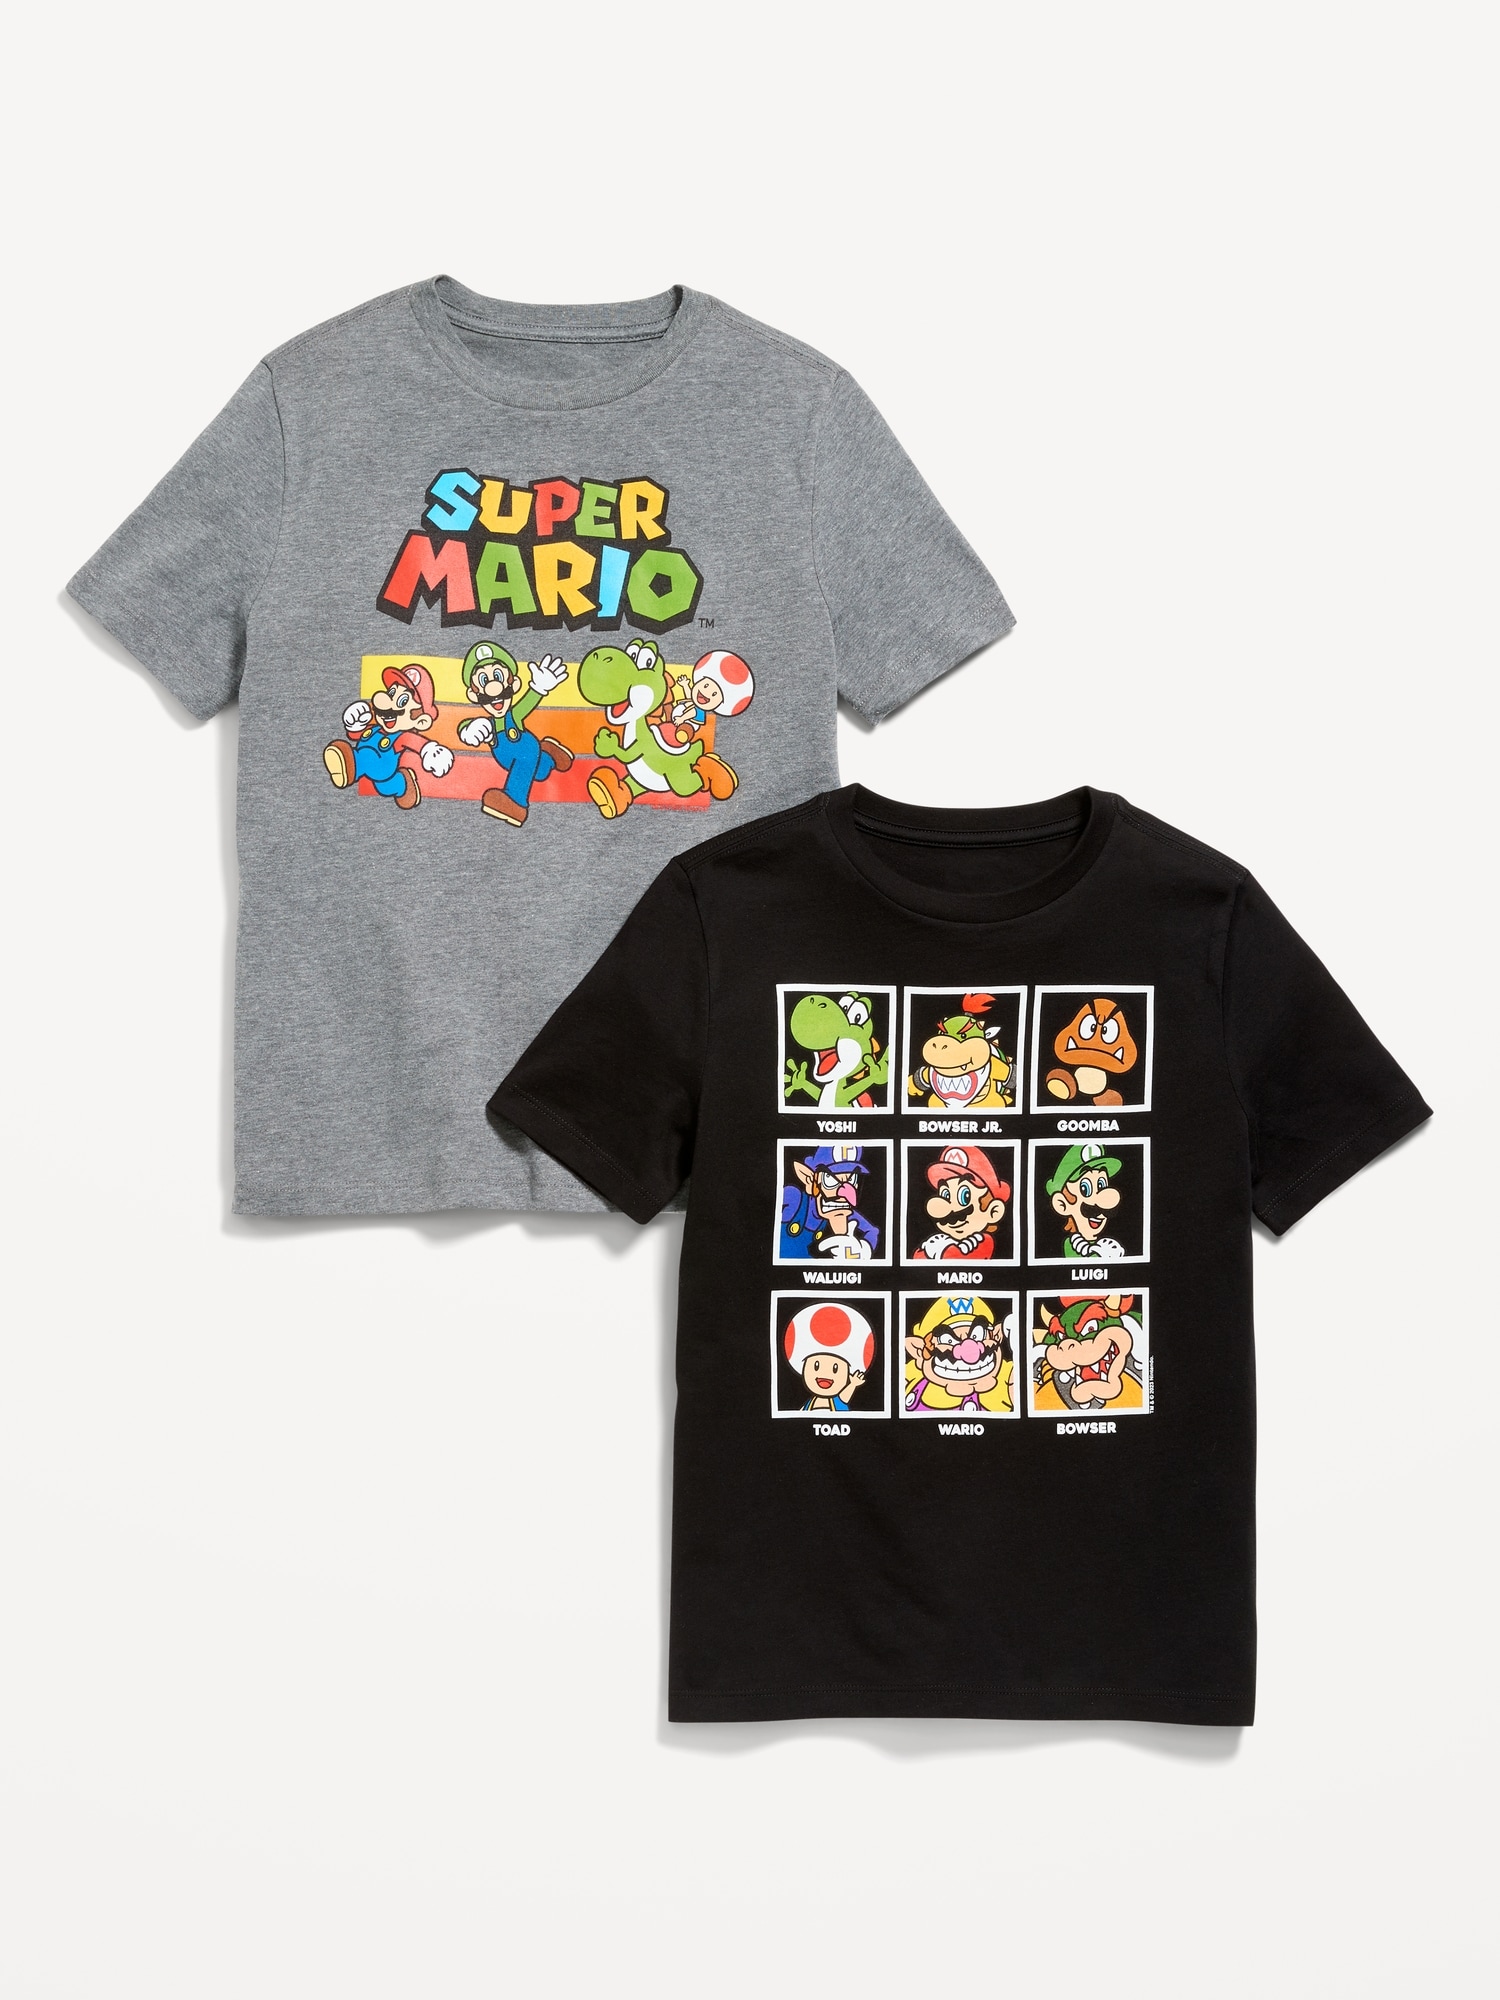 Super Mario Gender-Neutral T-Shirt 2-Pack for Kids Hot Deal